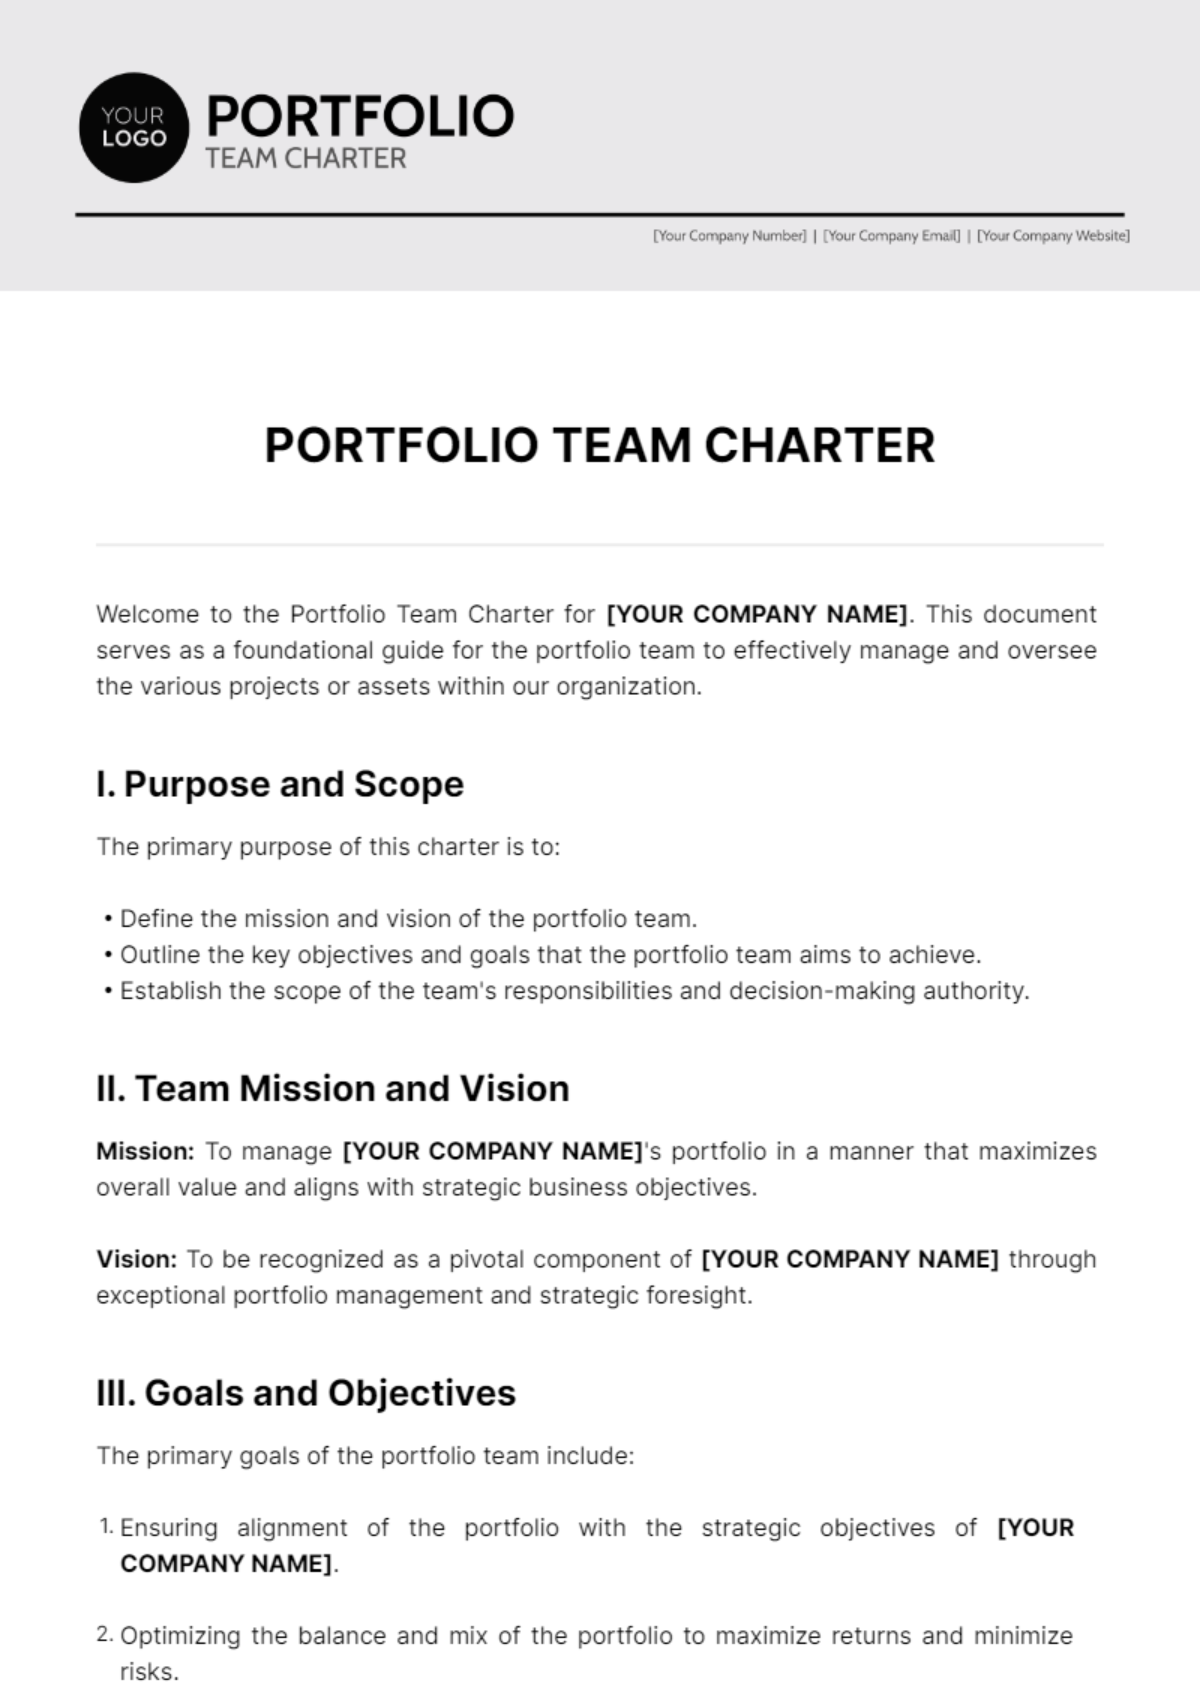 Portfolio Team Charter Template